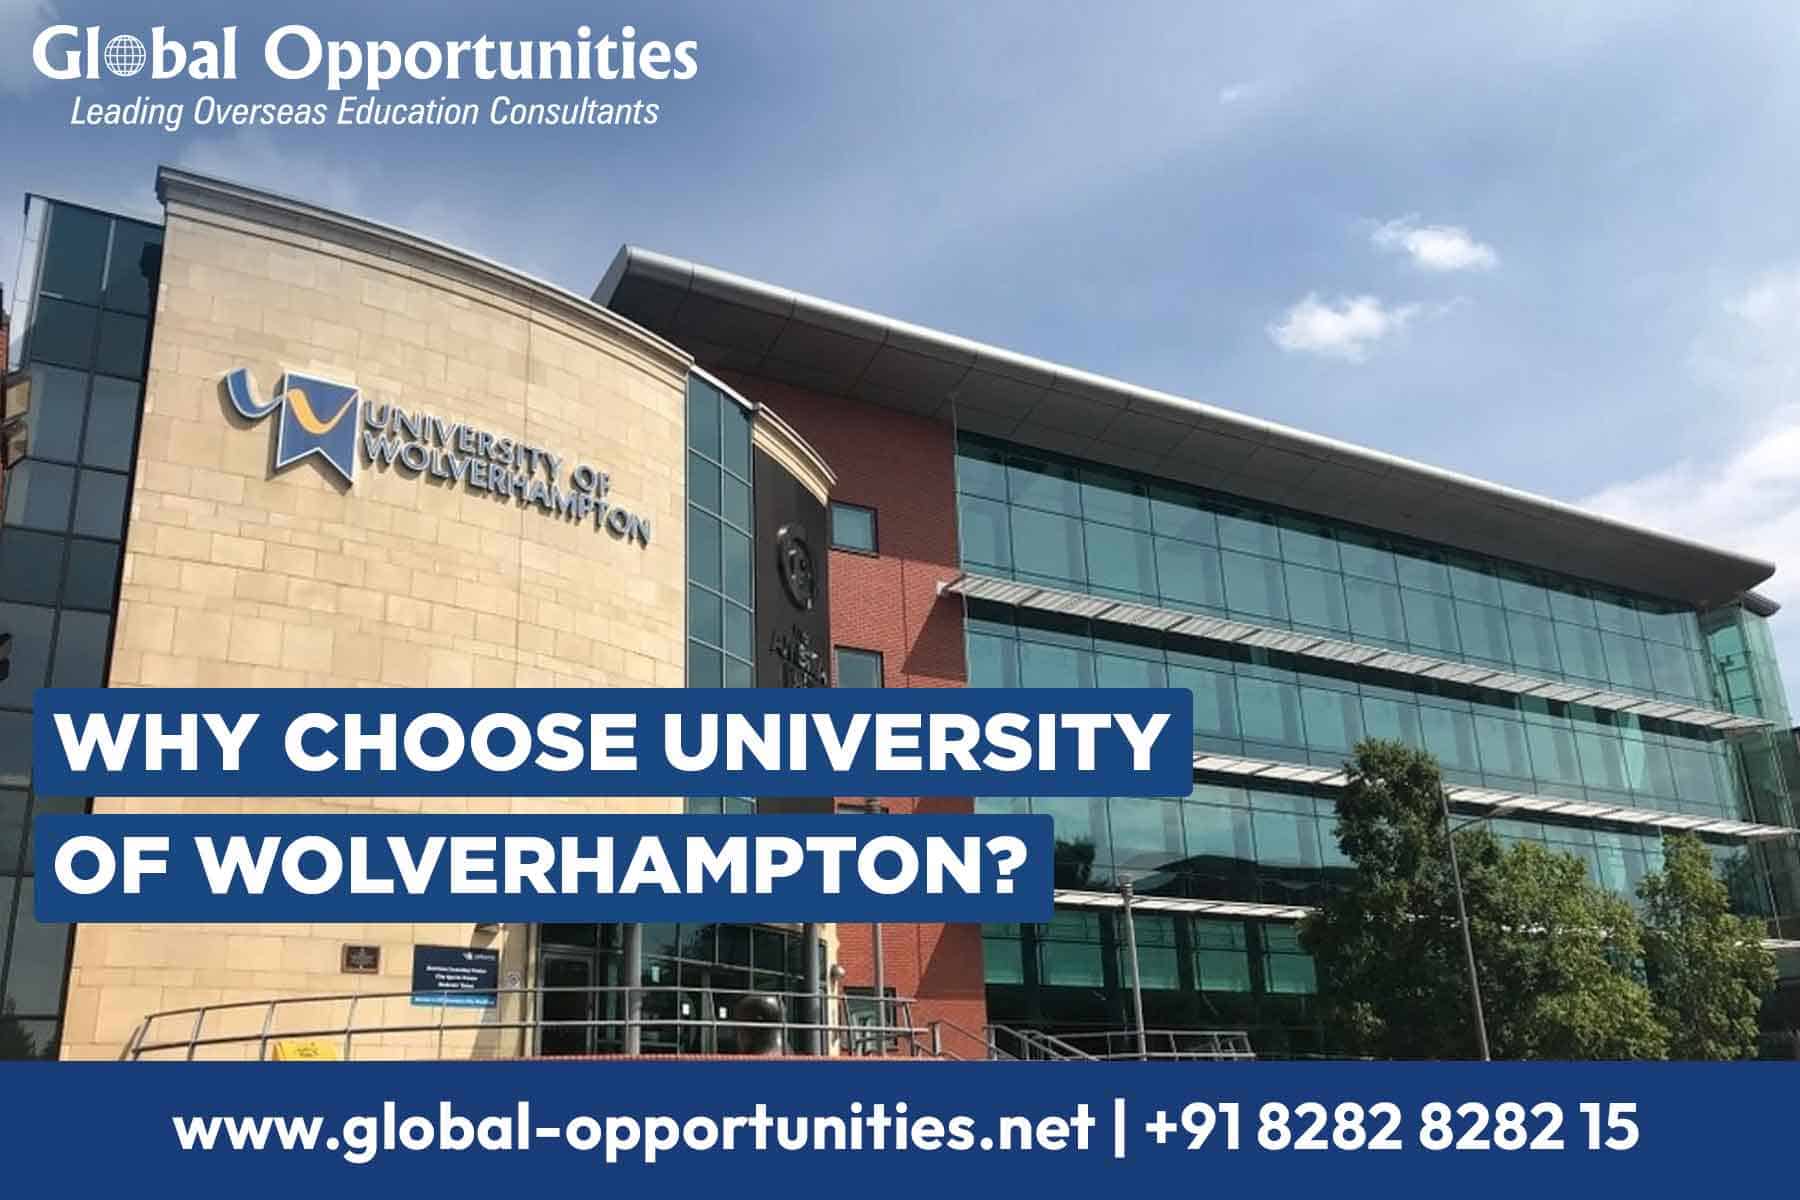 Why choose University of Wolverhampton